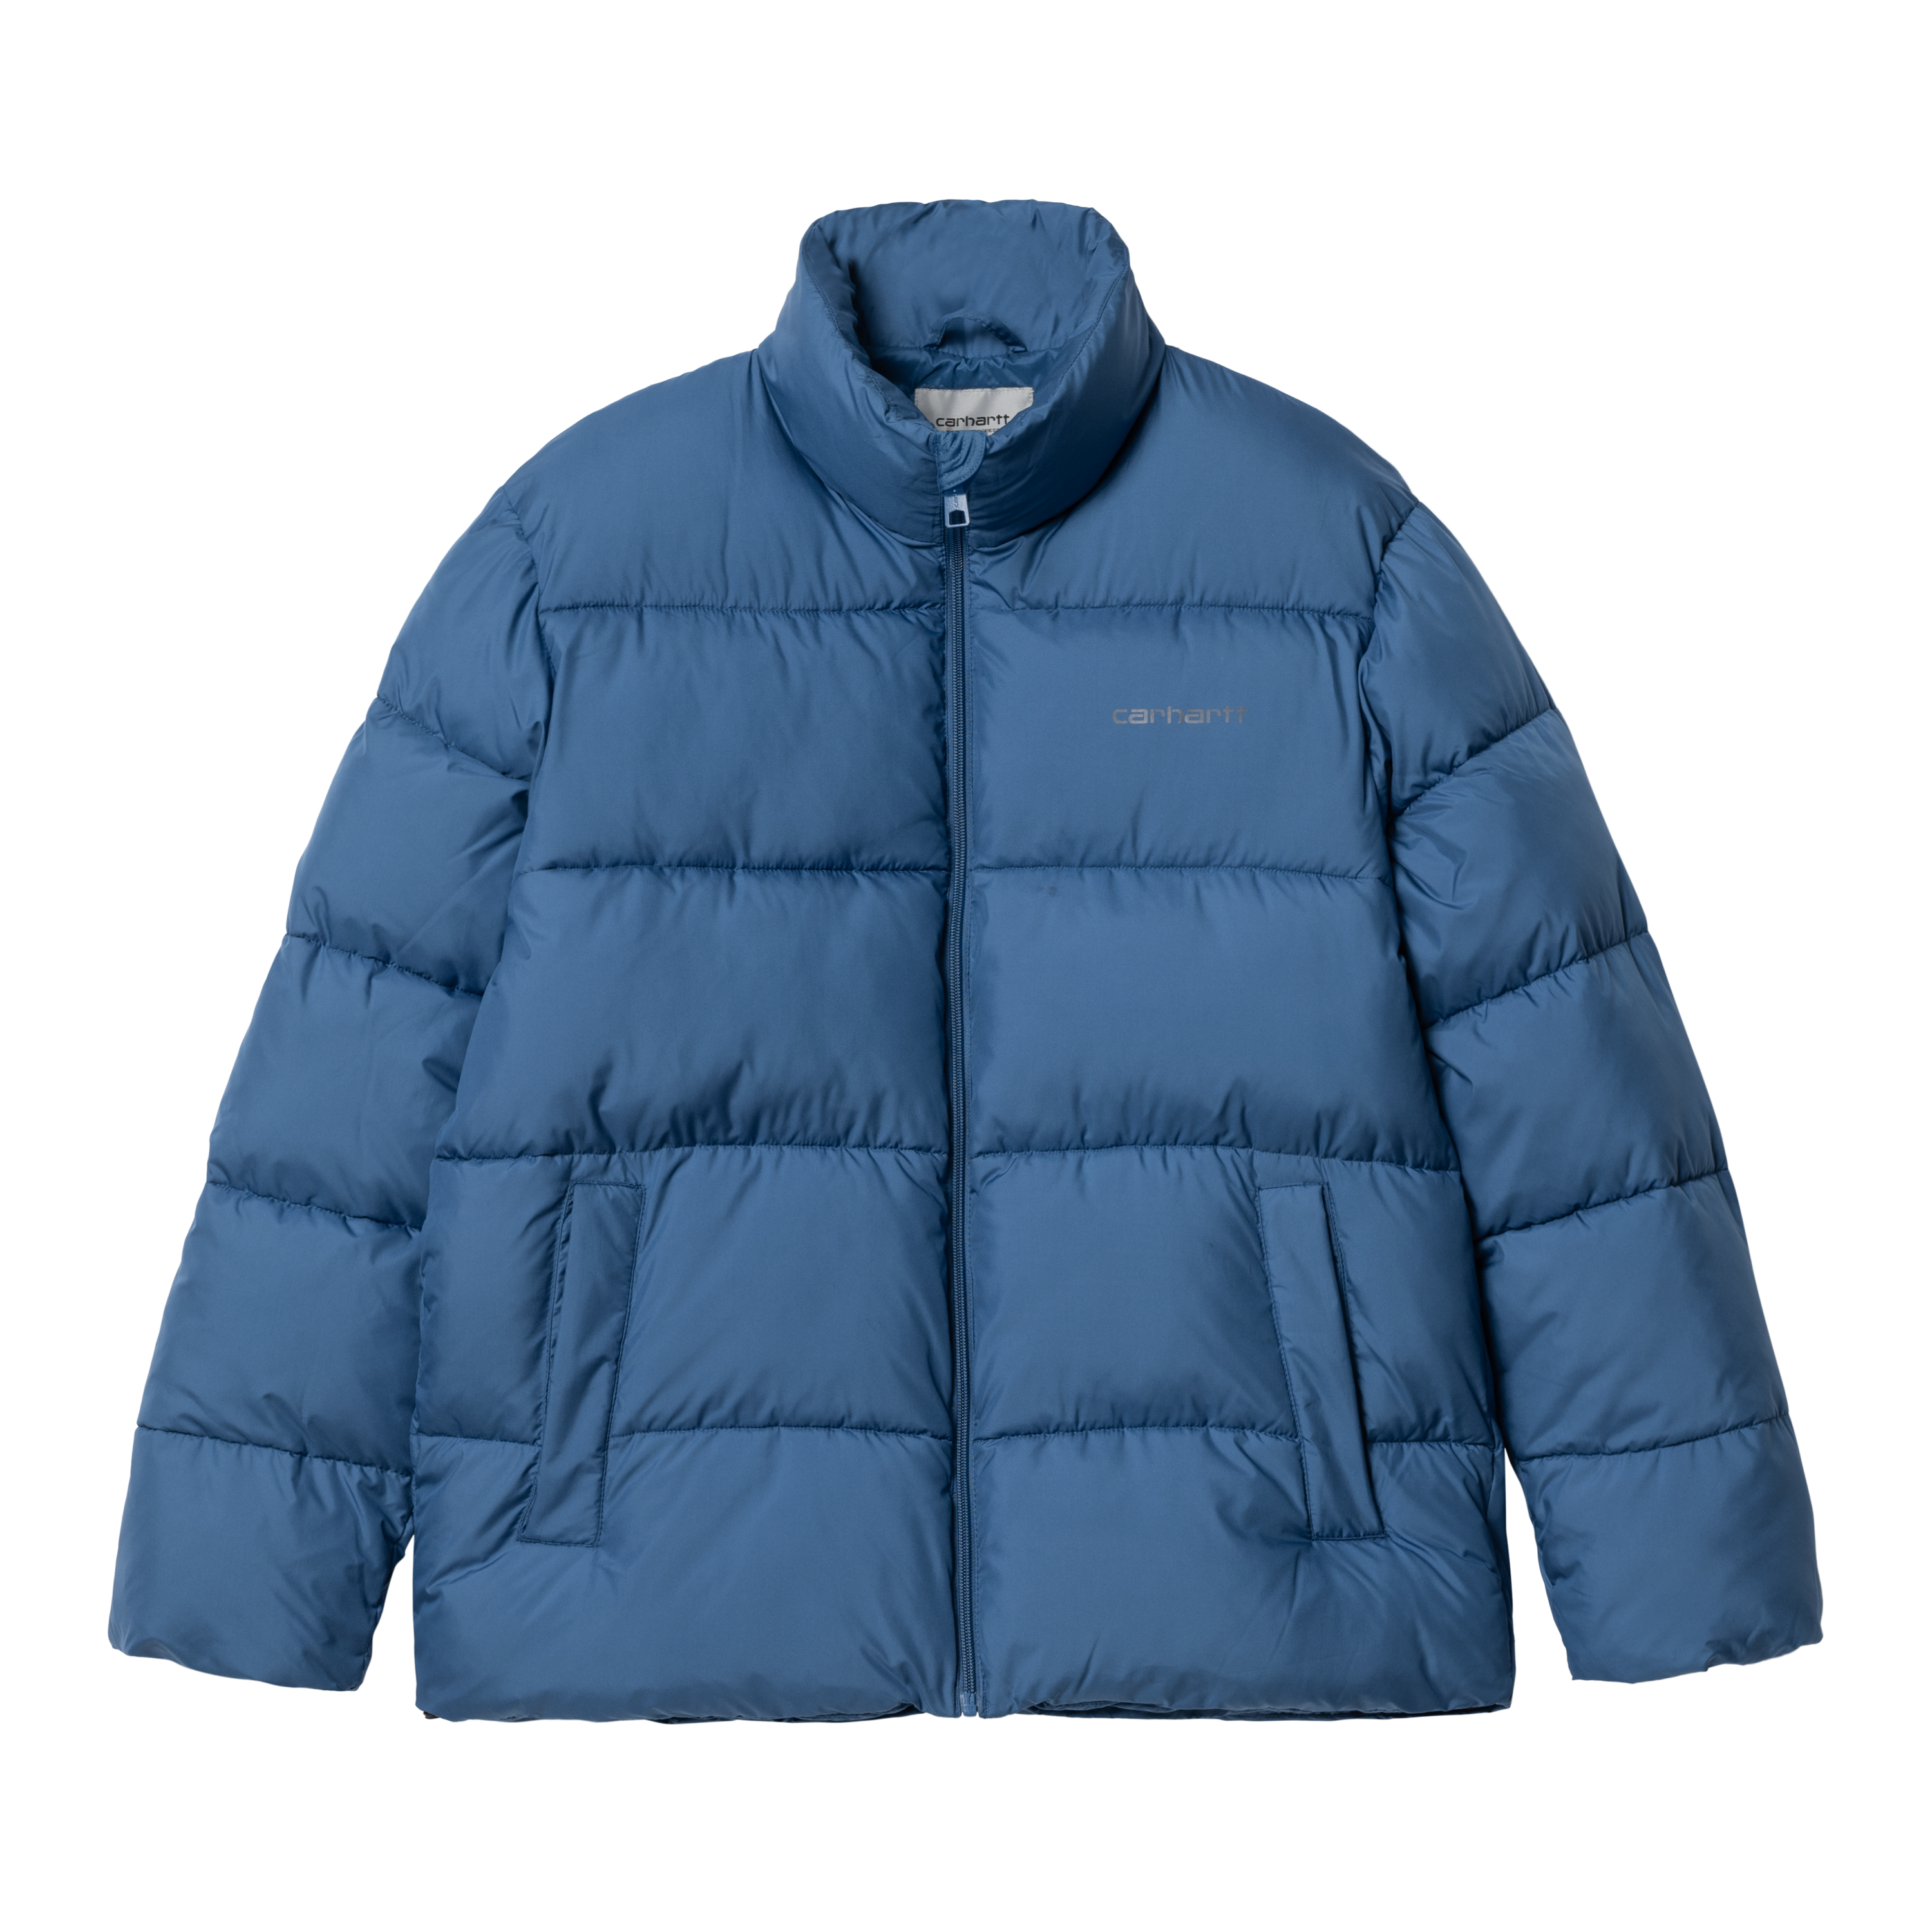 Carhartt WIP Springfield Jacket en Azul